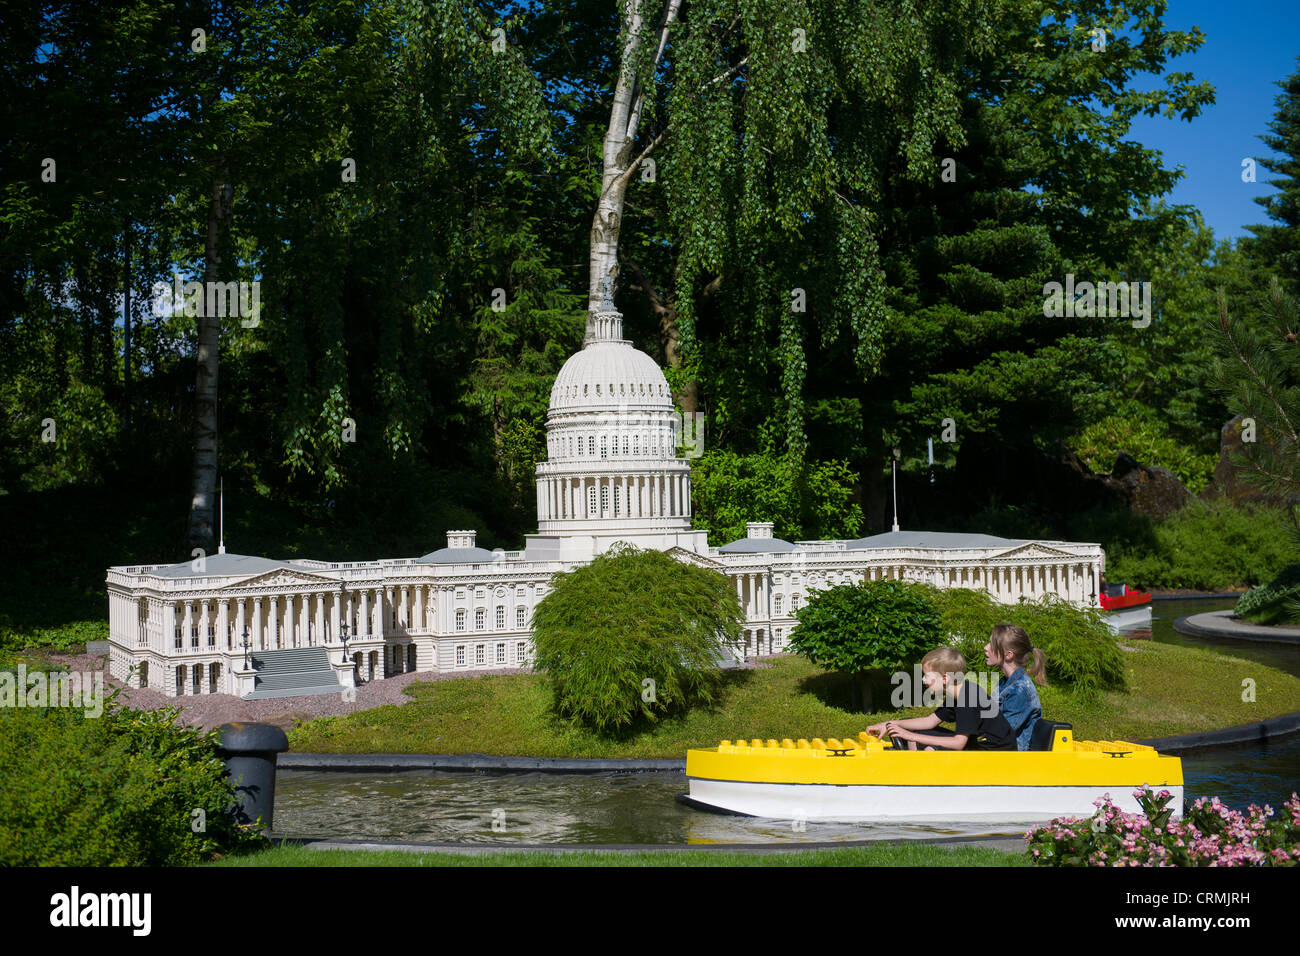 Children on Miniboat passing Lego model of the United States Capitol Building, Legoland, Billund, Denmark Stock Photo